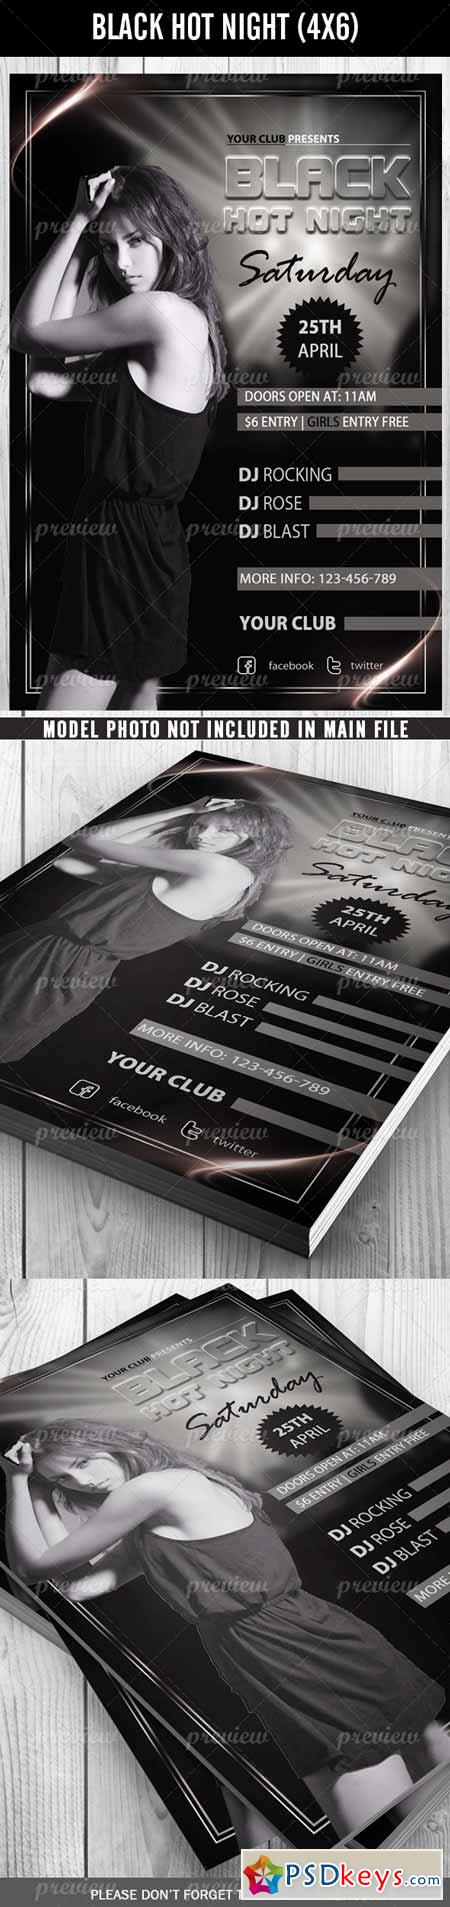 Black Hot Night Party Flyer 2615